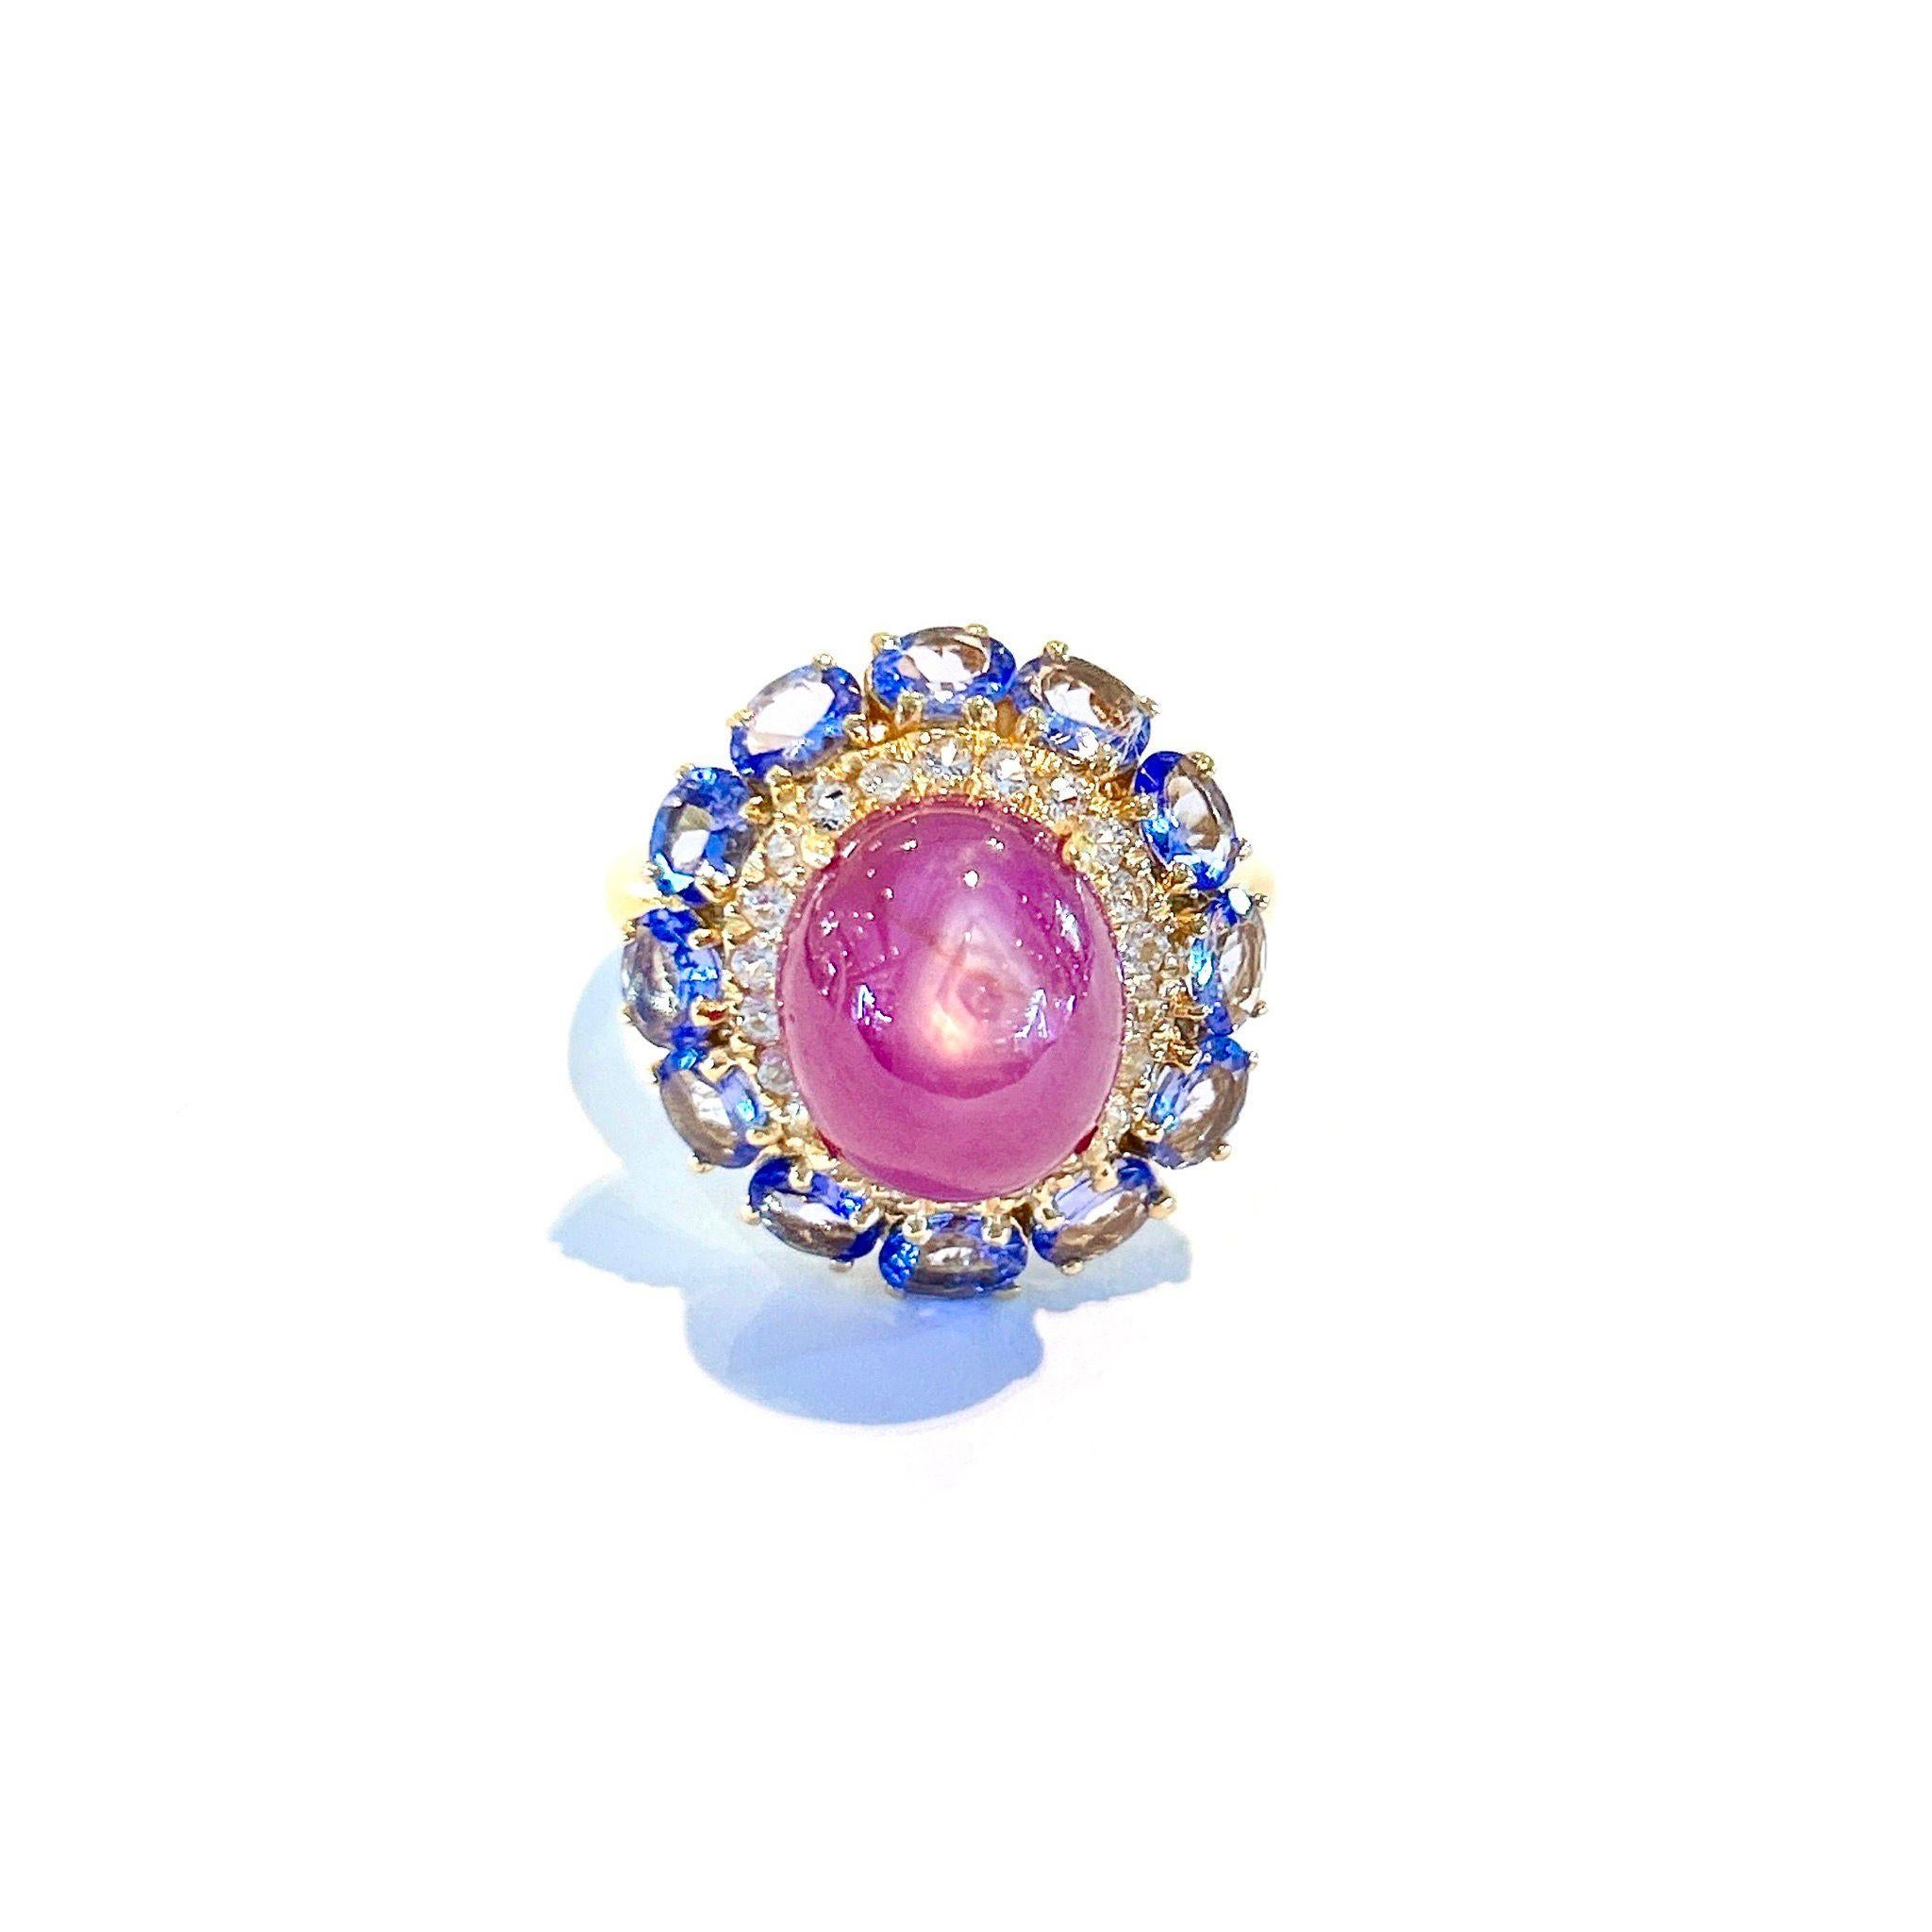 Bochic “Capri” Earrings & Cocktail Ring, Multi Gems Set in 22k Gold & Silver 3